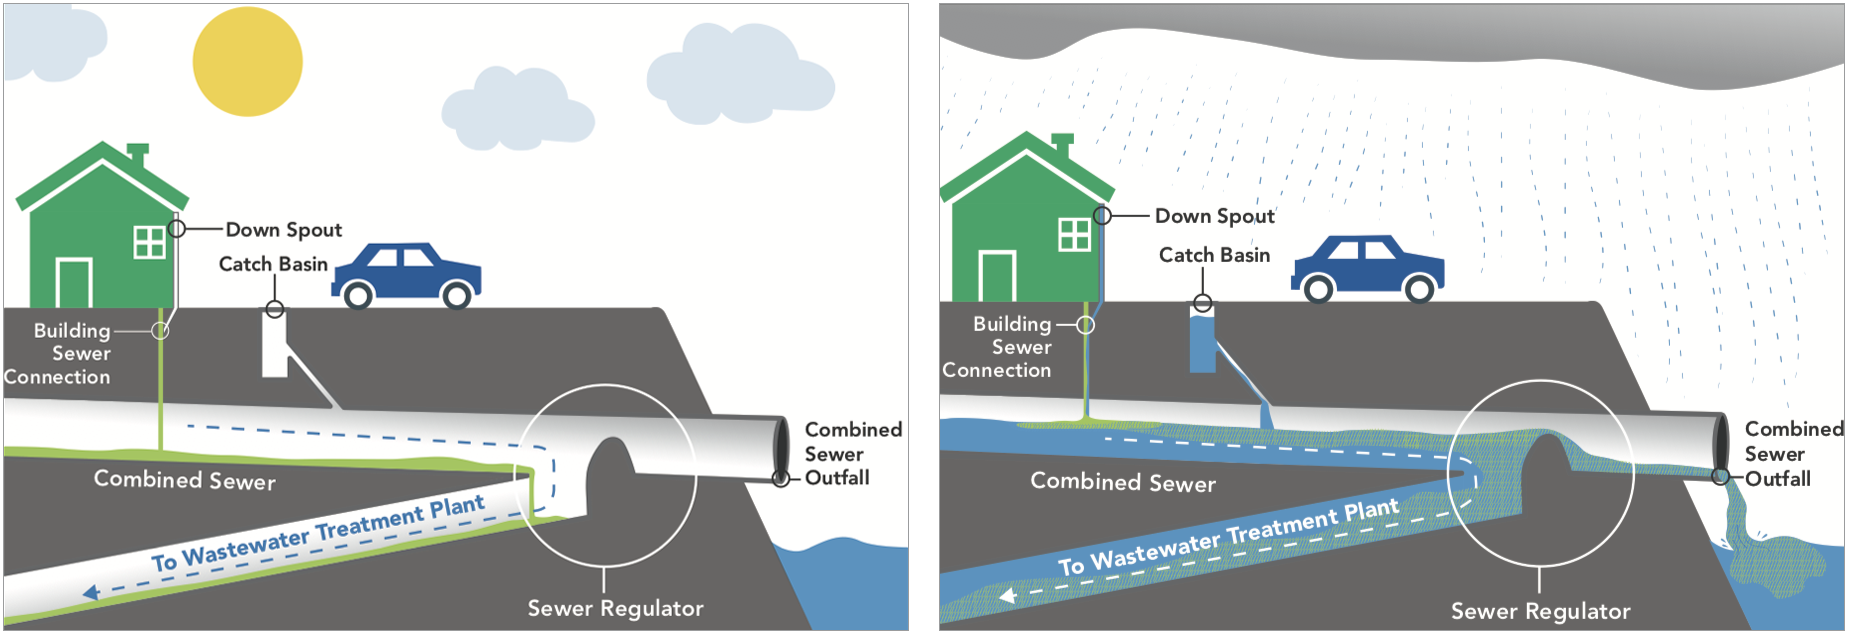 The combined sewer overflow (CSO) system under dry (left) and wet (right) conditions. Graphic: courtesy of NYC Department of Environmental Protection. <a href="https://nycaudubon.org/rails/active_storage/disk/eyJfcmFpbHMiOnsibWVzc2FnZSI6IkJBaDdDRG9JYTJWNVNTSnJkbUZ5YVdGdWRITXZjbmxvZFdjM2RIQmpPWGw2ZEdNNVptSnRjVGhxTW5ob2JHVnFkUzg1WlRRME5EZG1ZekJoTlRWbVlqVXpNRGxrTlRneE9UYzNNekV4TWpRNU5HUmlZbVptTVdFM05tRmtOemxpTWpJMFpXSmhaRFppWlRSbE9UQmlNbVZoQmpvR1JWUTZFR1JwYzNCdmMybDBhVzl1U1NJQmhHbHViR2x1WlRzZ1ptbHNaVzVoYldVOUltTnpieTFrY25rdGQyVjBMWGRsWVhSb1pYSXRZMjl1WkdsMGFXOXVjMTkzZDNjeExtNTVZeTVuYjNZdWNHNW5JanNnWm1sc1pXNWhiV1VxUFZWVVJpMDRKeWRqYzI4dFpISjVMWGRsZEMxM1pXRjBhR1Z5TFdOdmJtUnBkR2x2Ym5OZmQzZDNNUzV1ZVdNdVoyOTJMbkJ1WndZN0JsUTZFV052Ym5SbGJuUmZkSGx3WlVraURtbHRZV2RsTDNCdVp3WTdCbFE9IiwiZXhwIjoiMjAyMS0wMy0yOVQwNDowNjo0OS43MjJaIiwicHVyIjoiYmxvYl9rZXkifX0=--73a60831a7dd317c03e0b0df1e0e42665c65a58b/cso-dry-wet-weather-conditions_www1.nyc.gov.png?content_type=image%2Fpng&disposition=inline%3B+filename%3D%22cso-dry-wet-weather-conditions_www1.nyc.gov.png%22%3B+filename%2A%3DUTF-8%27%27cso-dry-wet-weather-conditions_www1.nyc.gov.png">Click here to view full, enlarged image.</a>